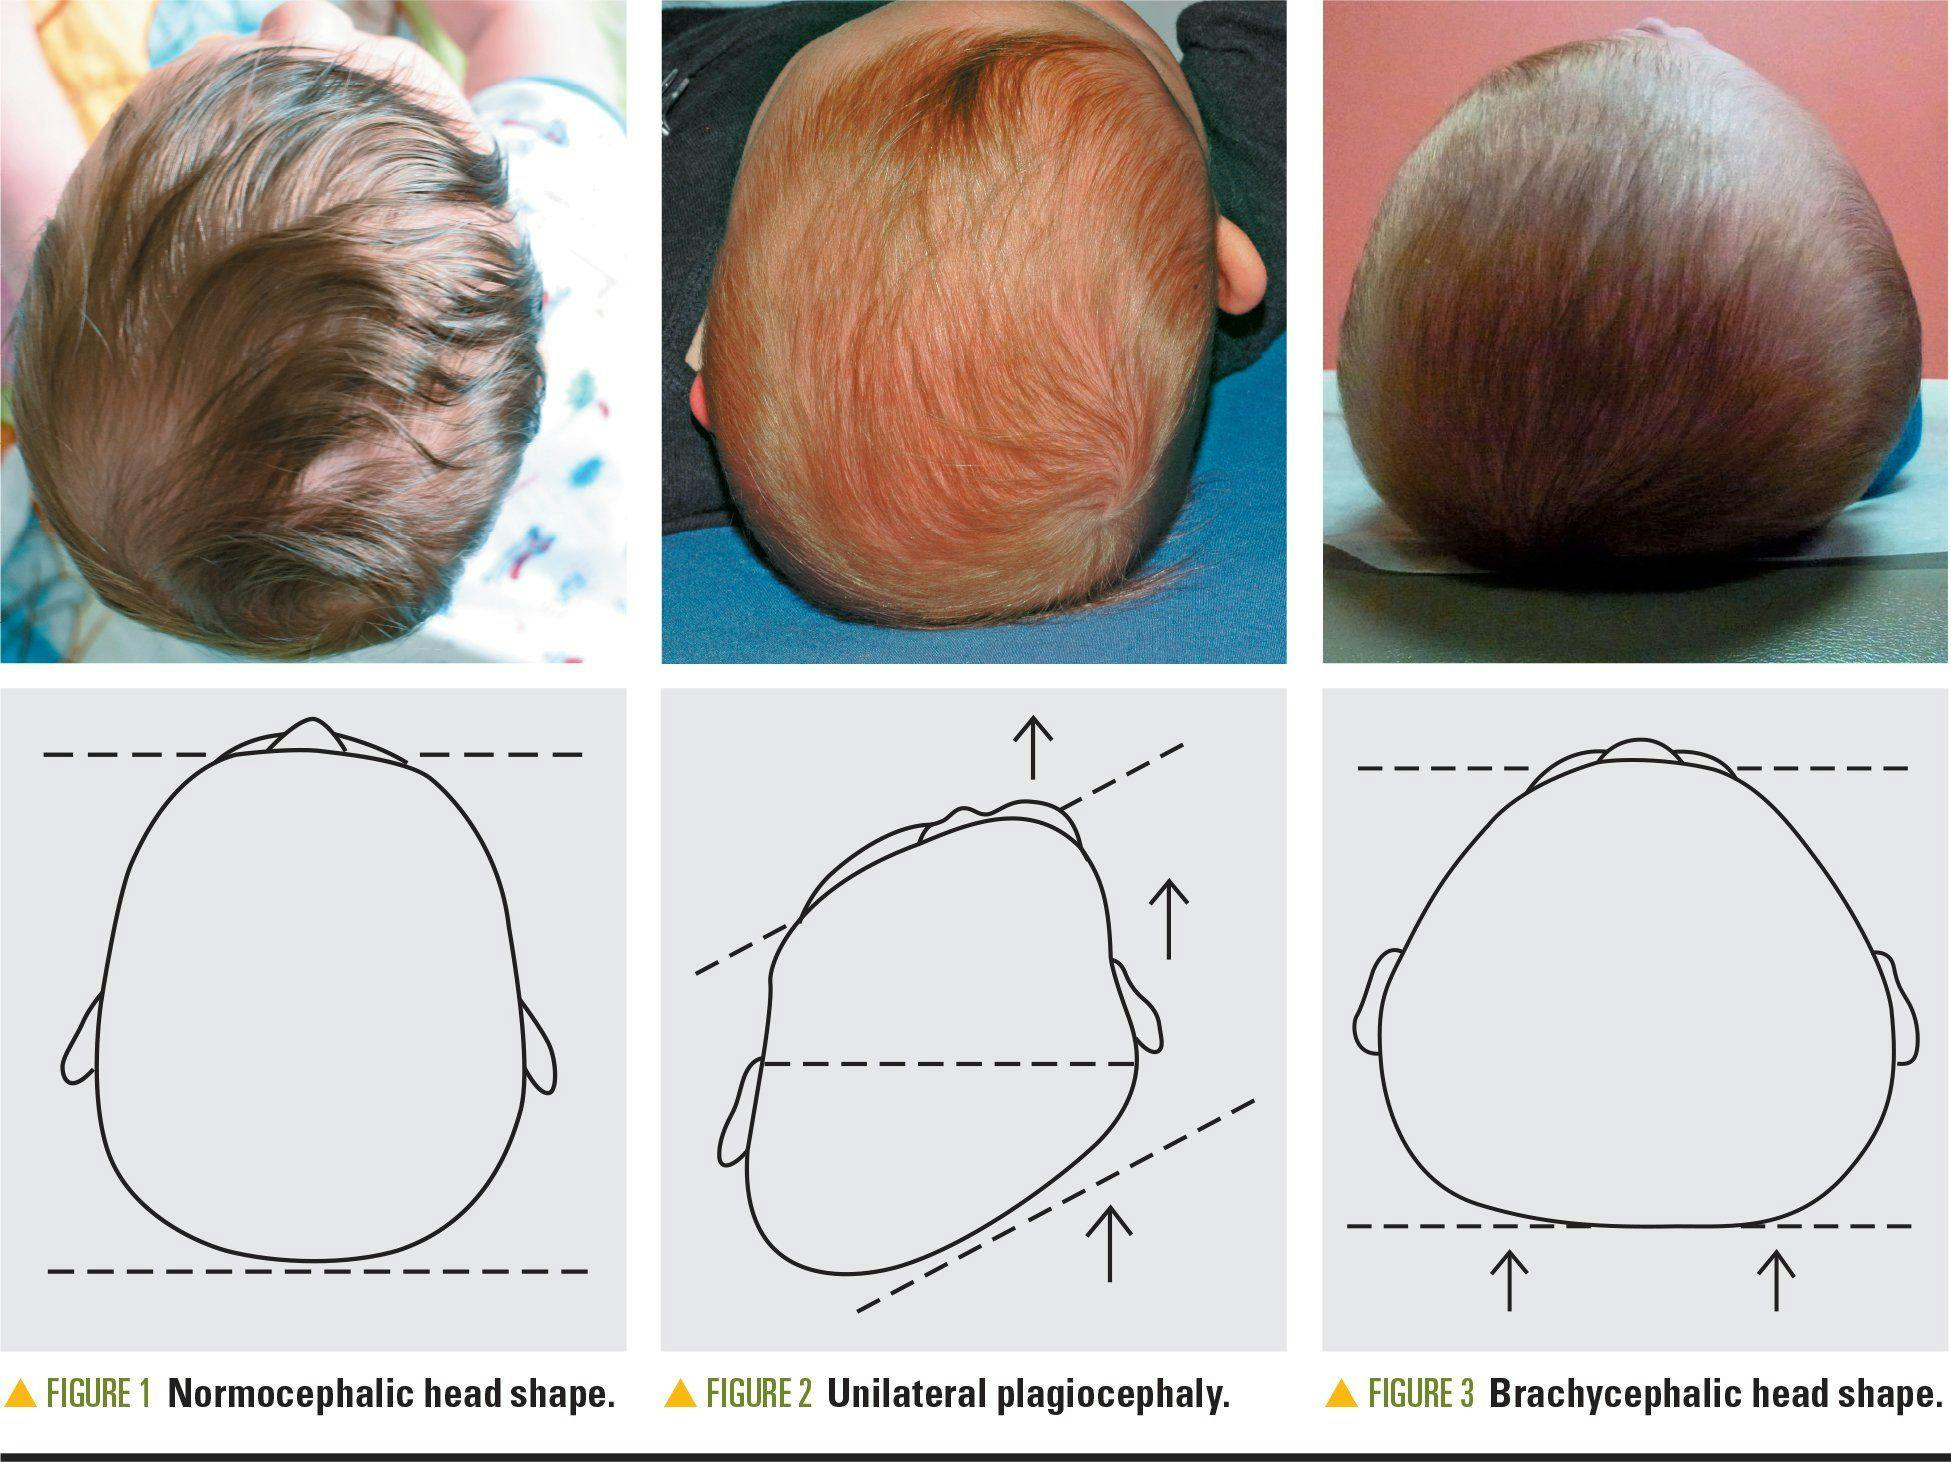 Normocephalic head shape, unilateral plagiocephaly, brachycephalic head shape